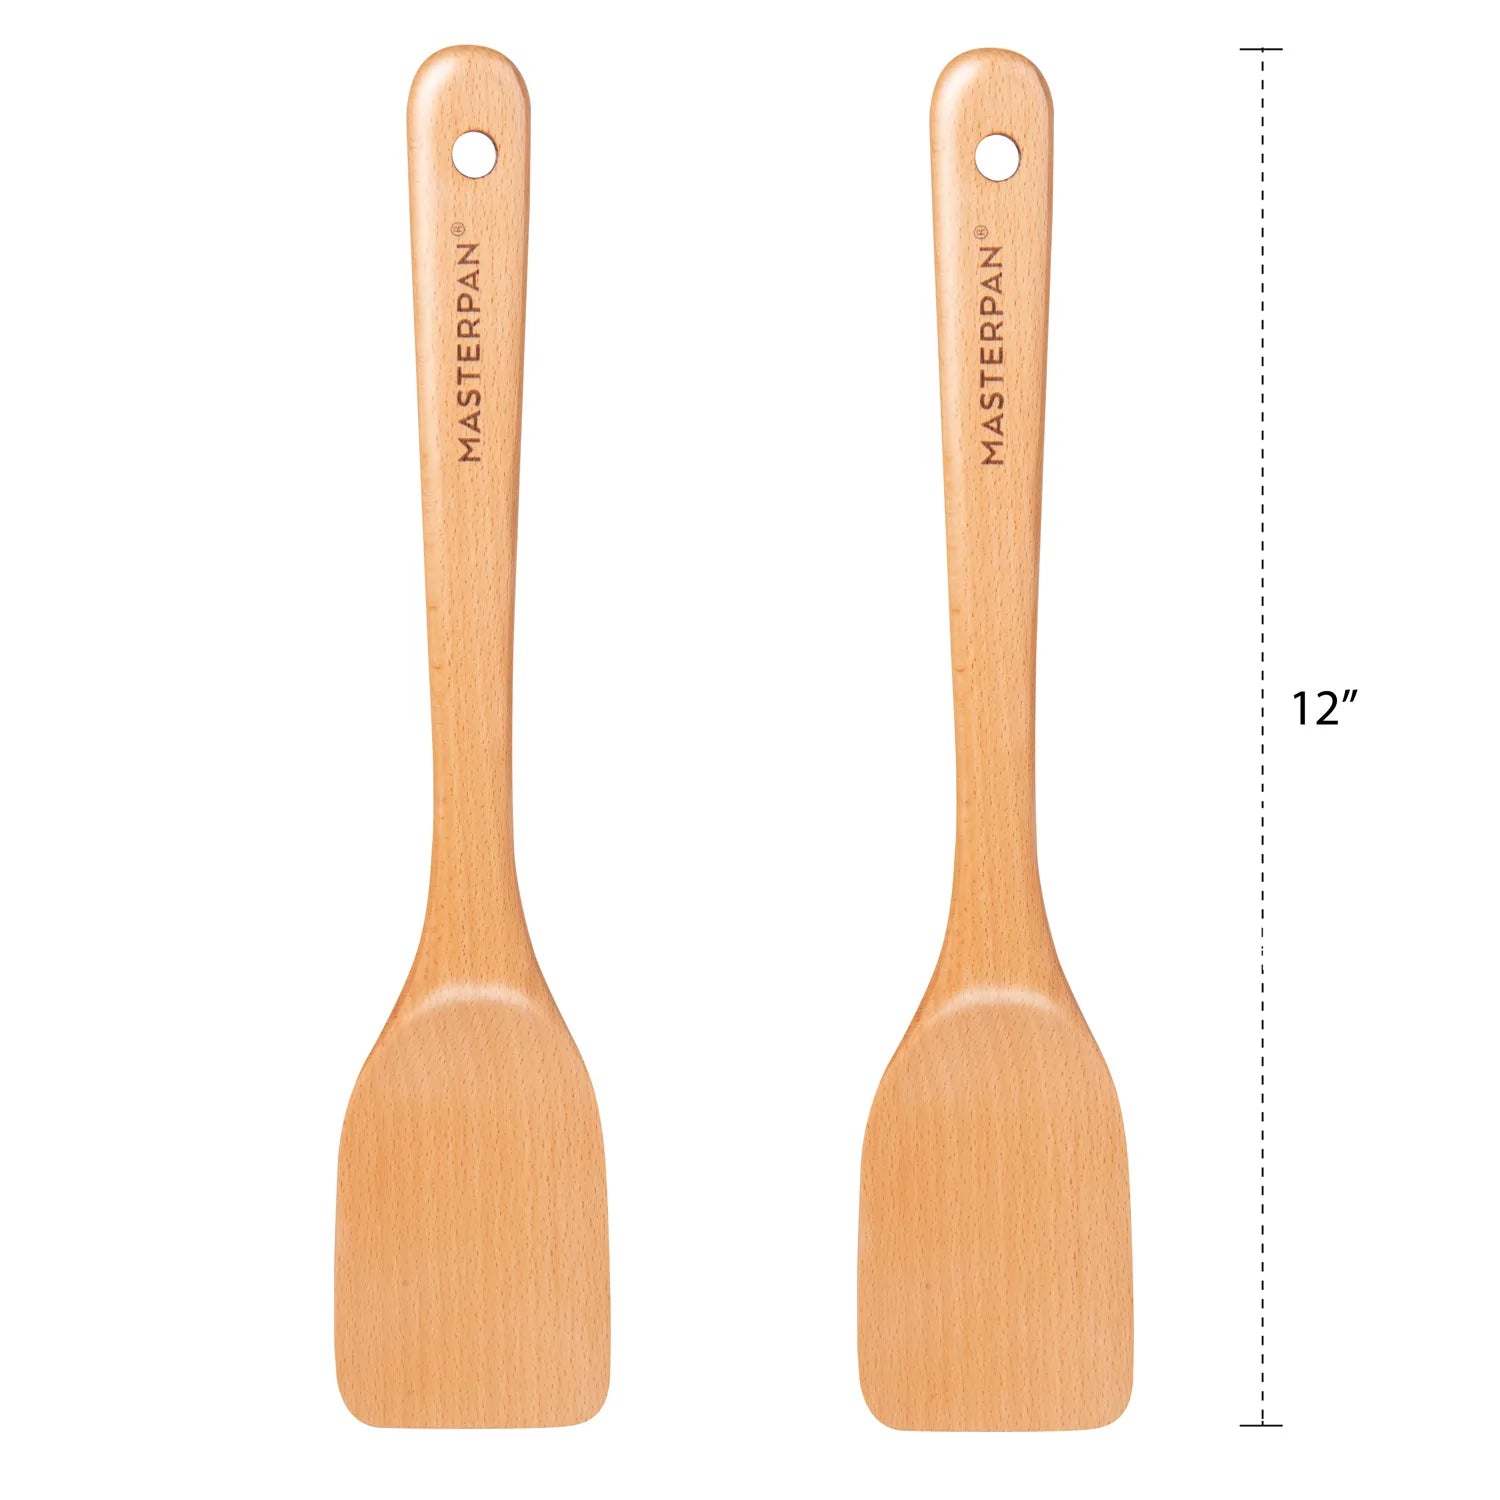 Wood kitchen utensil, saute tool, wooden spatula, stirring spatula